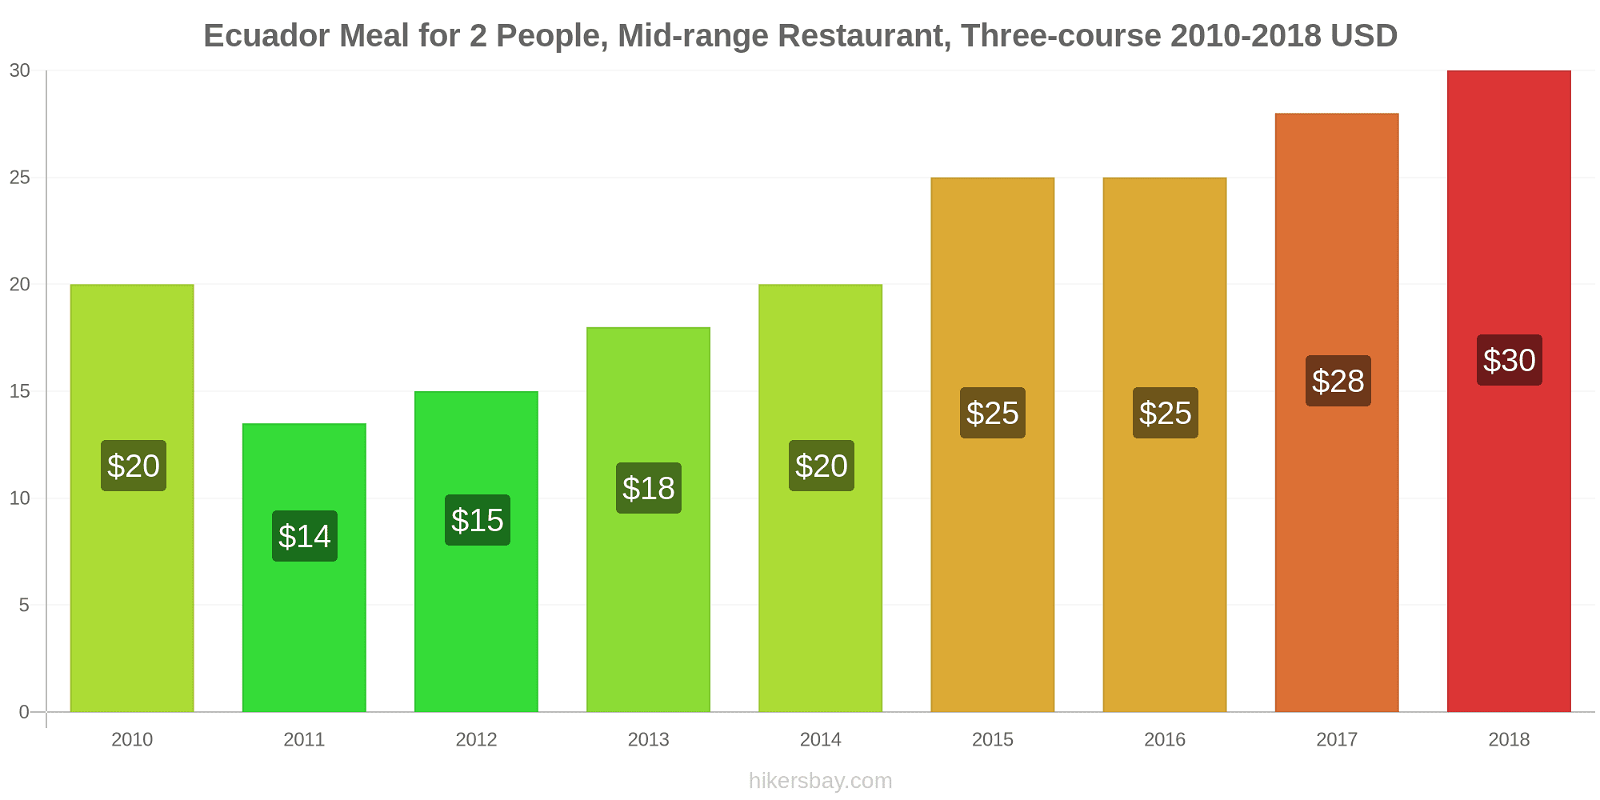 Ecuador price changes Meal for 2 People, Mid-range Restaurant, Three-course hikersbay.com